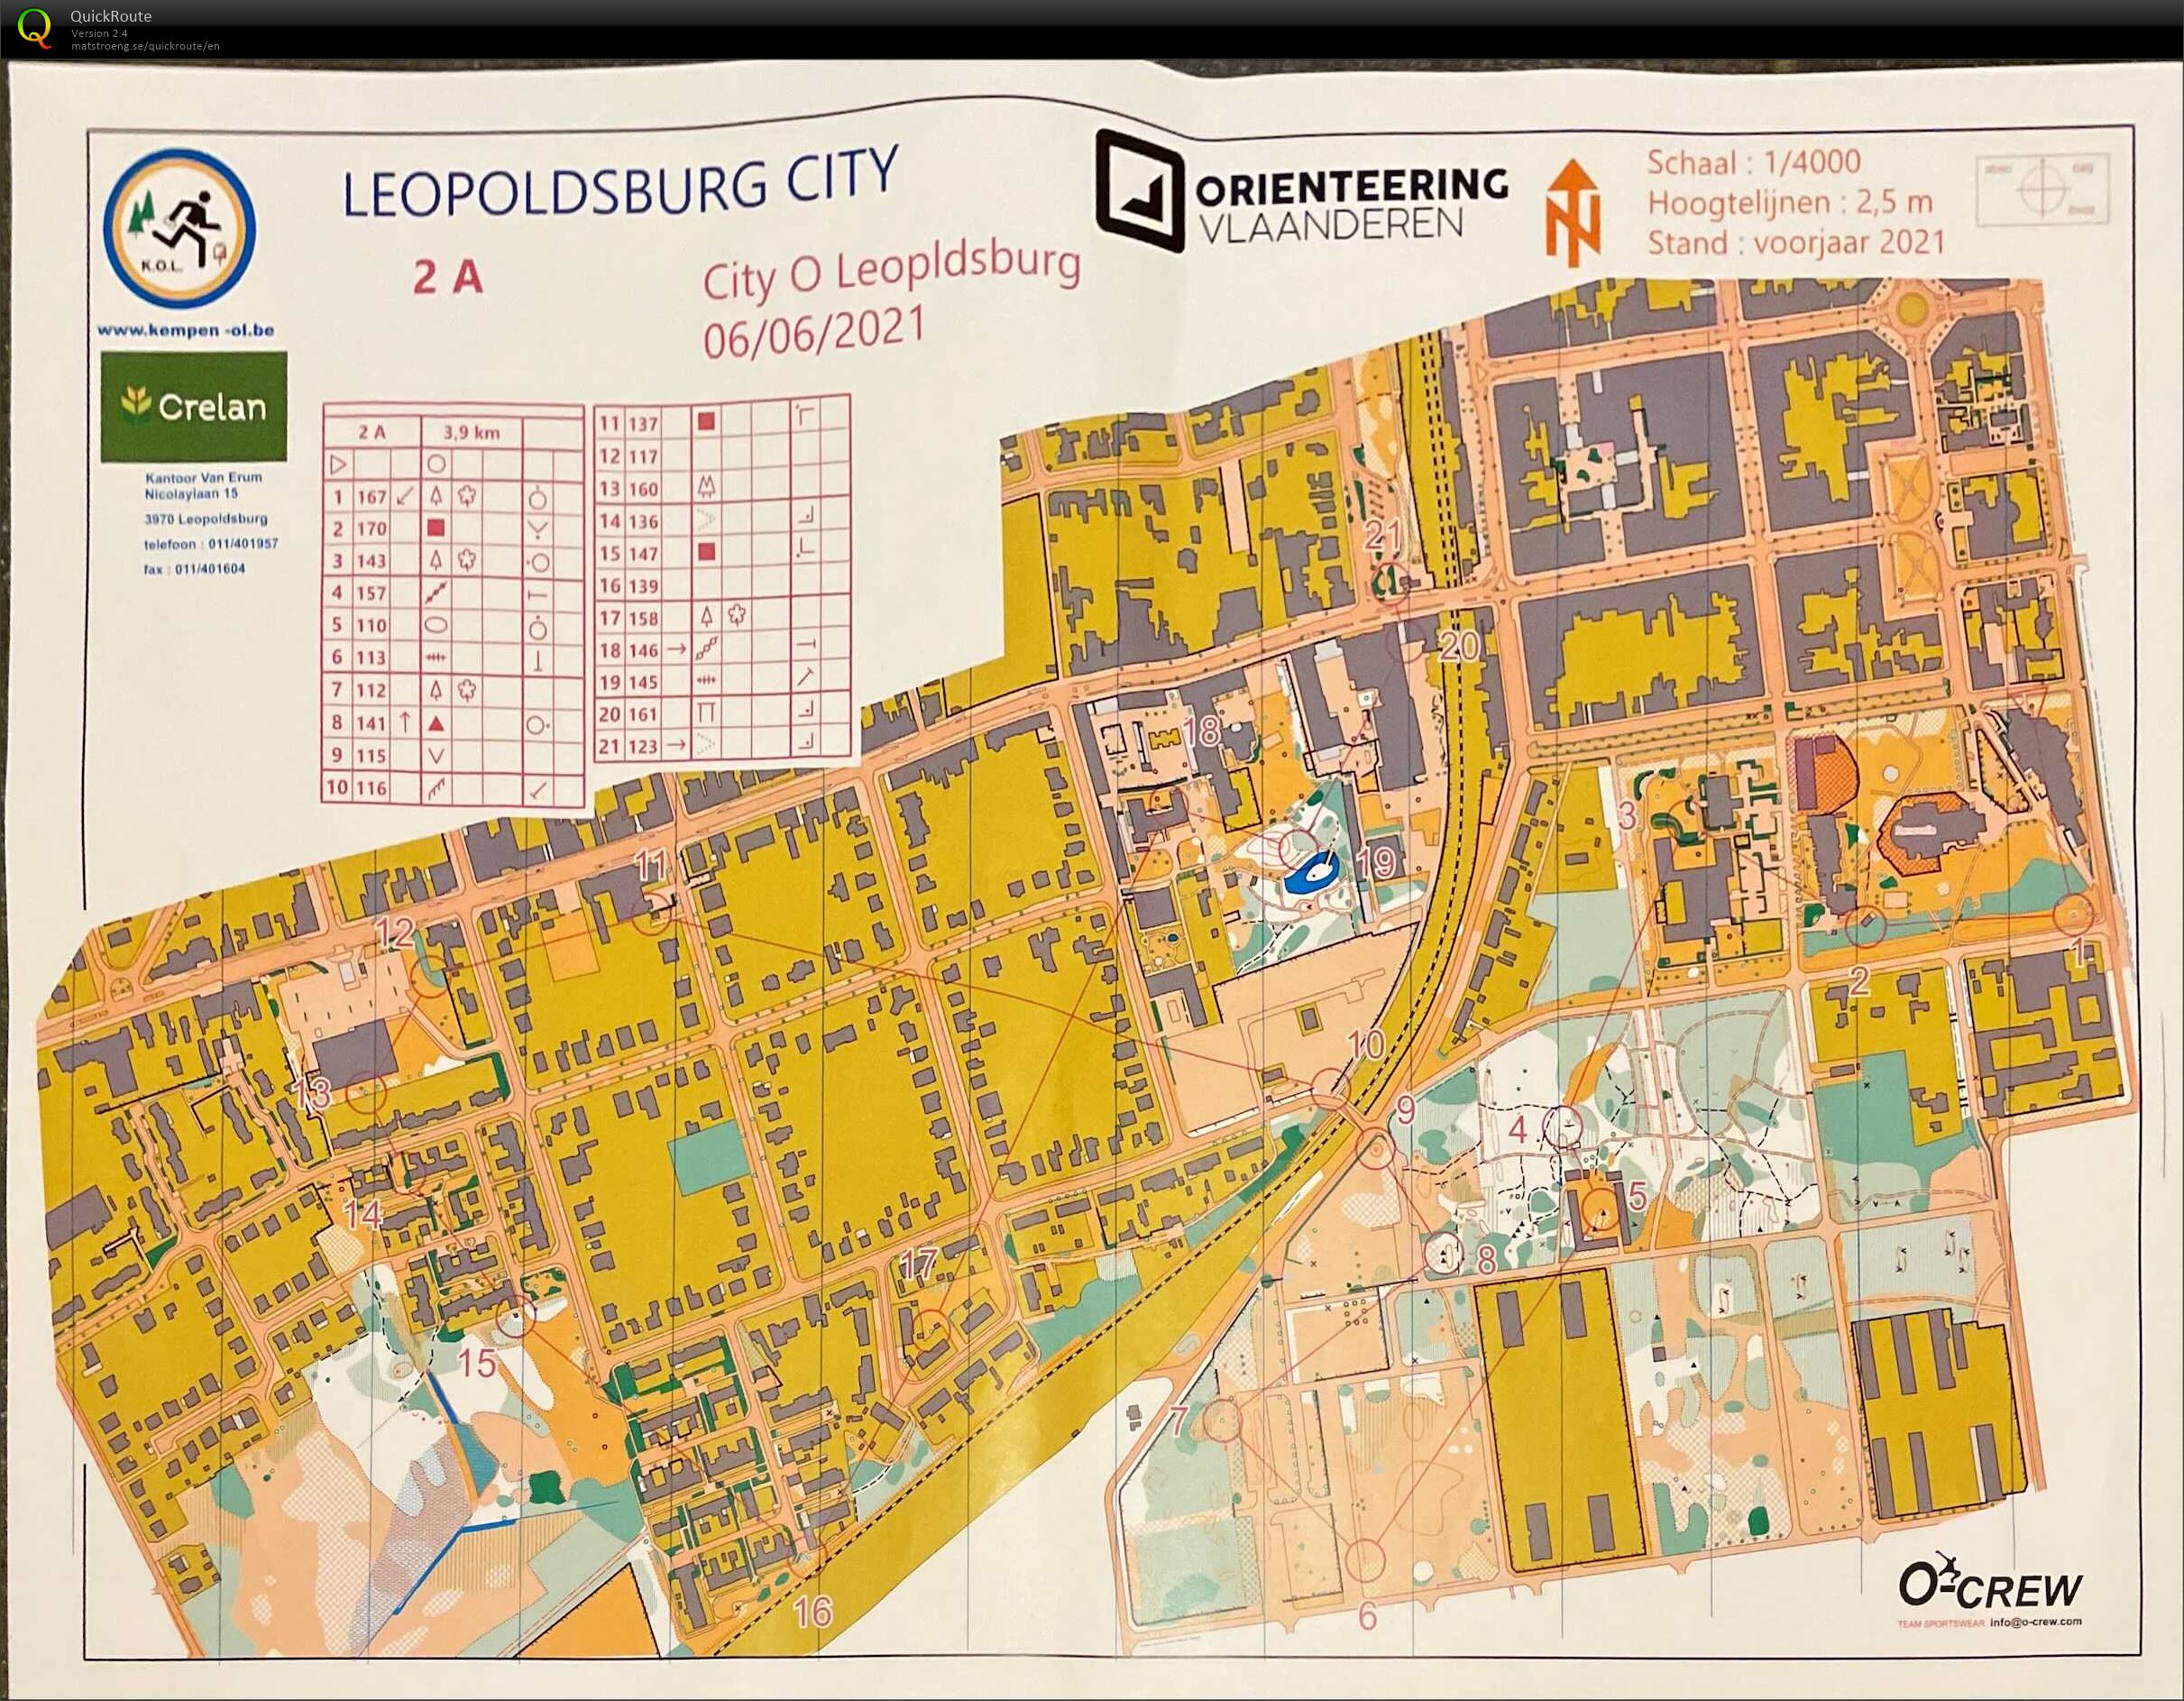 Leopoldsburg City - A (06-06-2021)